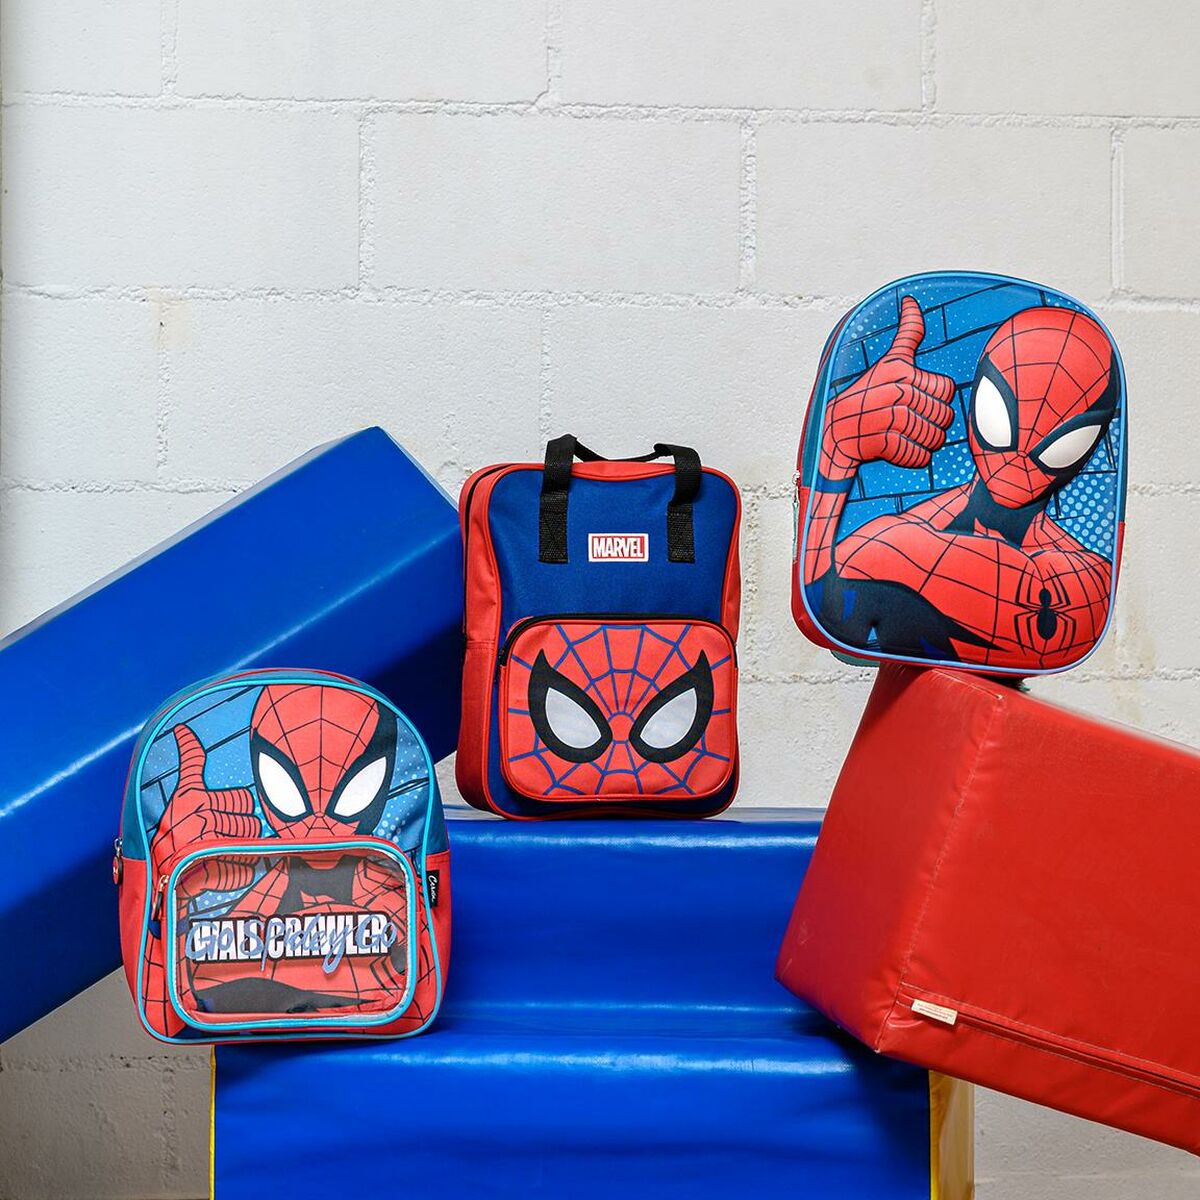 3D-Kinderrugzak Spider-Man Rood Blauw 25 x 31 x 10 cm